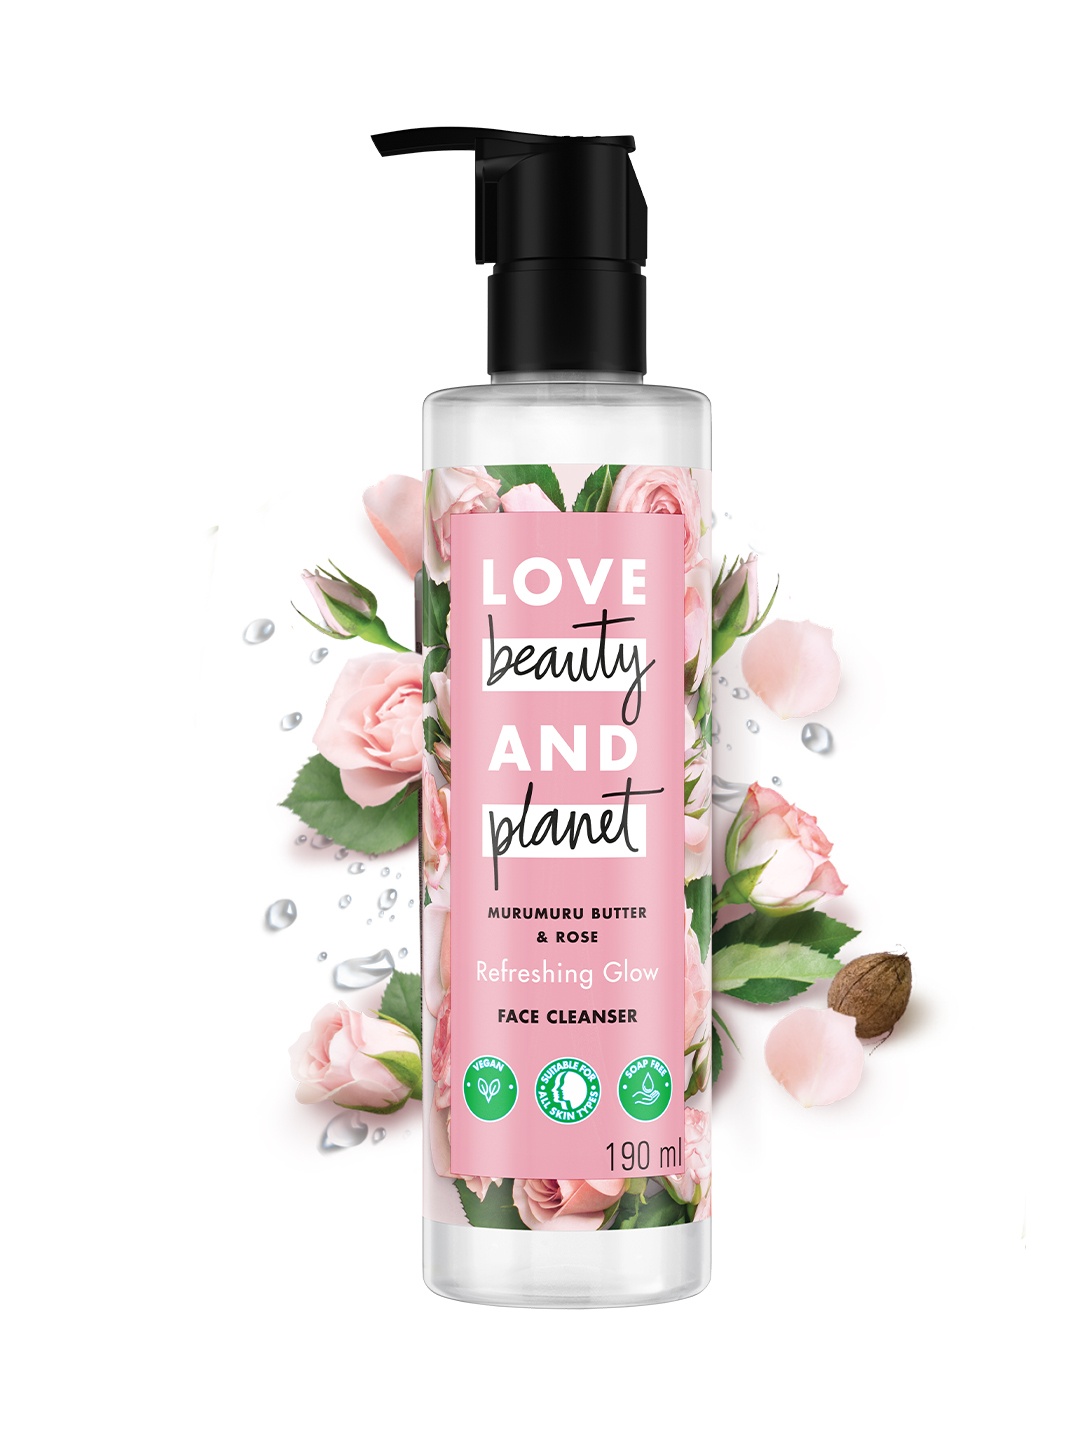 Myntra - Love Beauty & Planet Murumuru Butter & Rose Refreshing Glow Face Cleanser – 190 ml Price